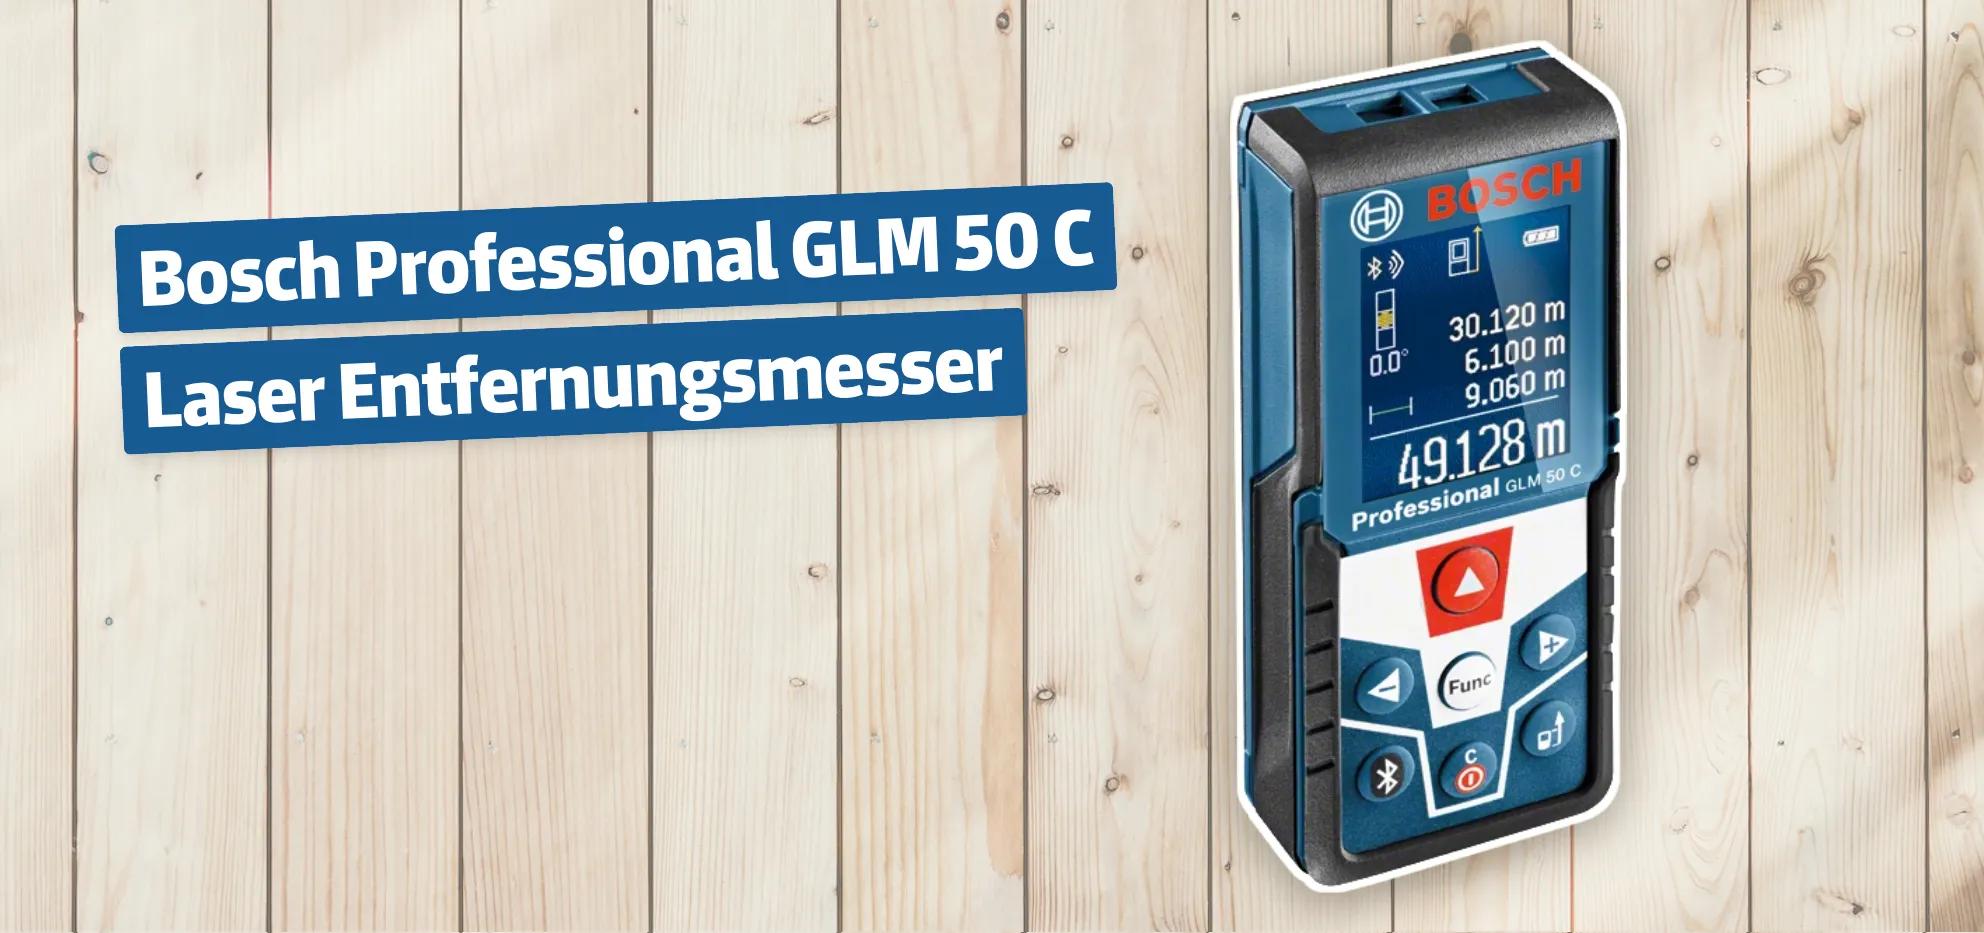 Bosch Professional GLM 50 C Laser Entfernungsmesser